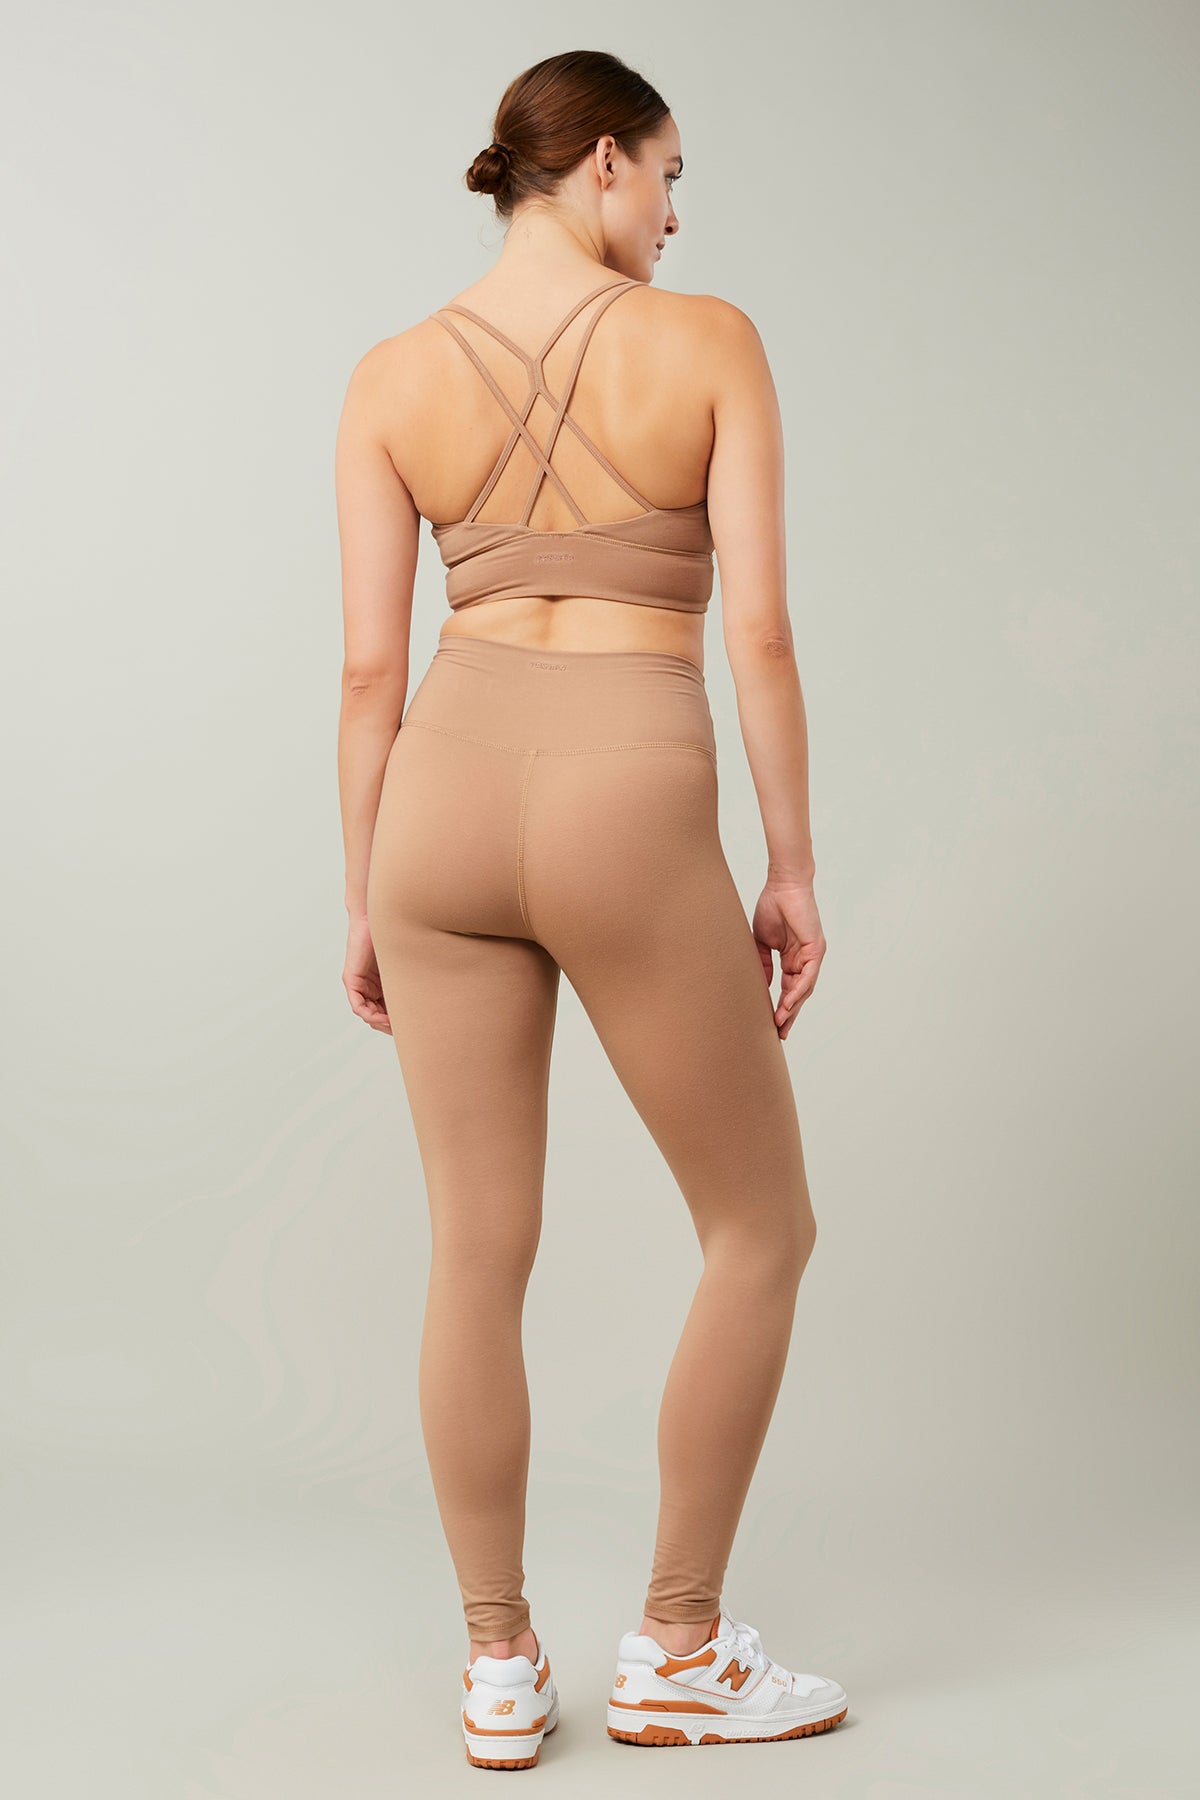 Mandala Yoga Bra Braun Outfit Rückseite - New Studio Bra